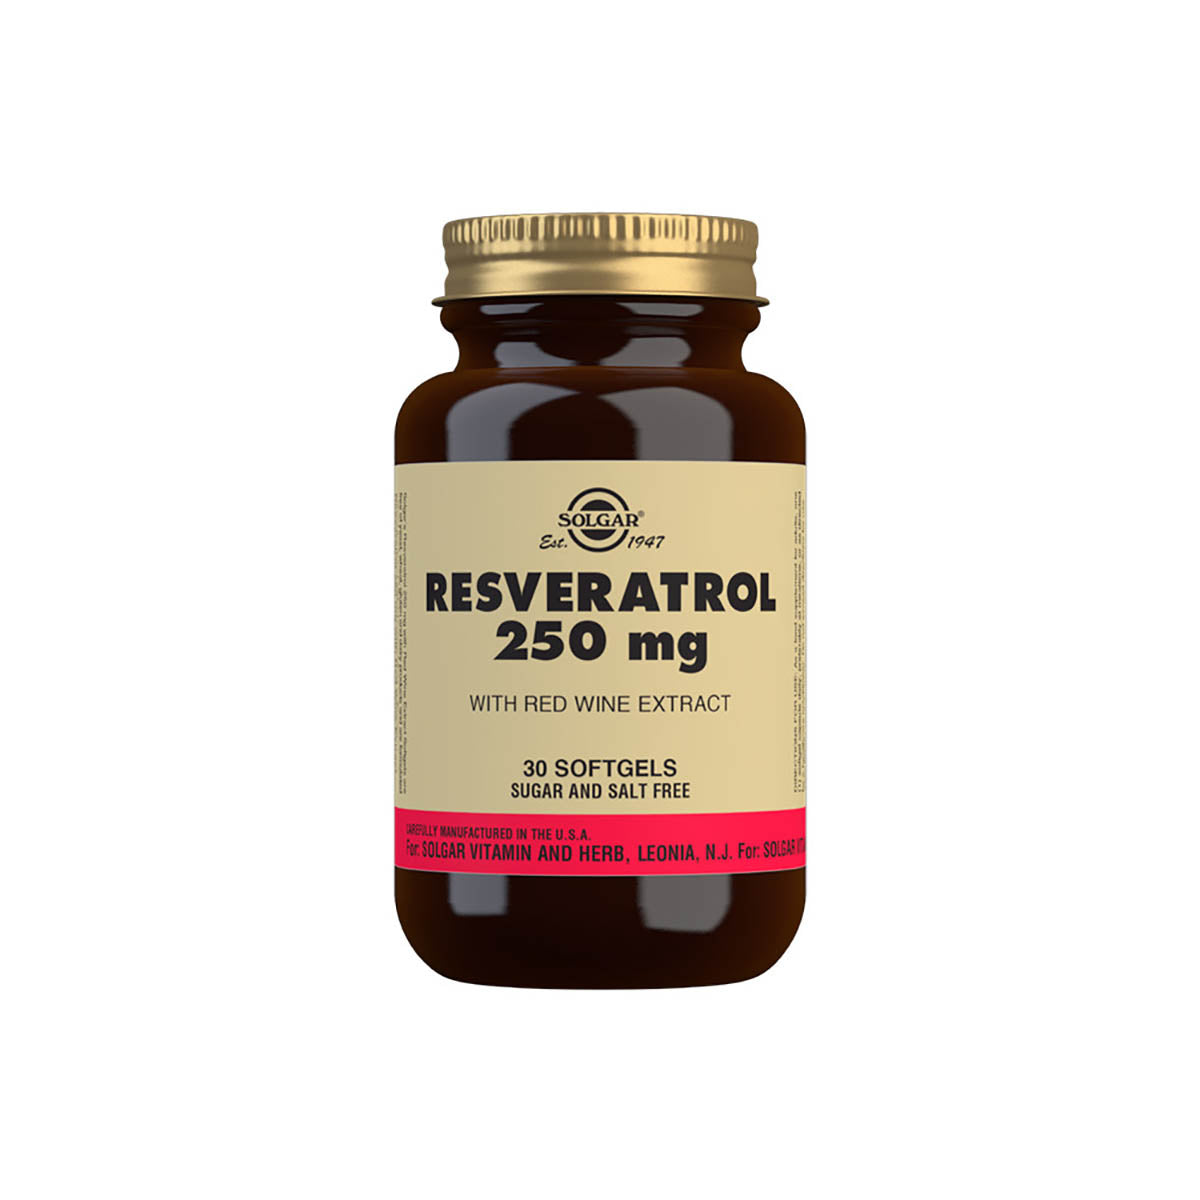 Solgar® Resveratrol 250 mg Softgels - Pack of 30